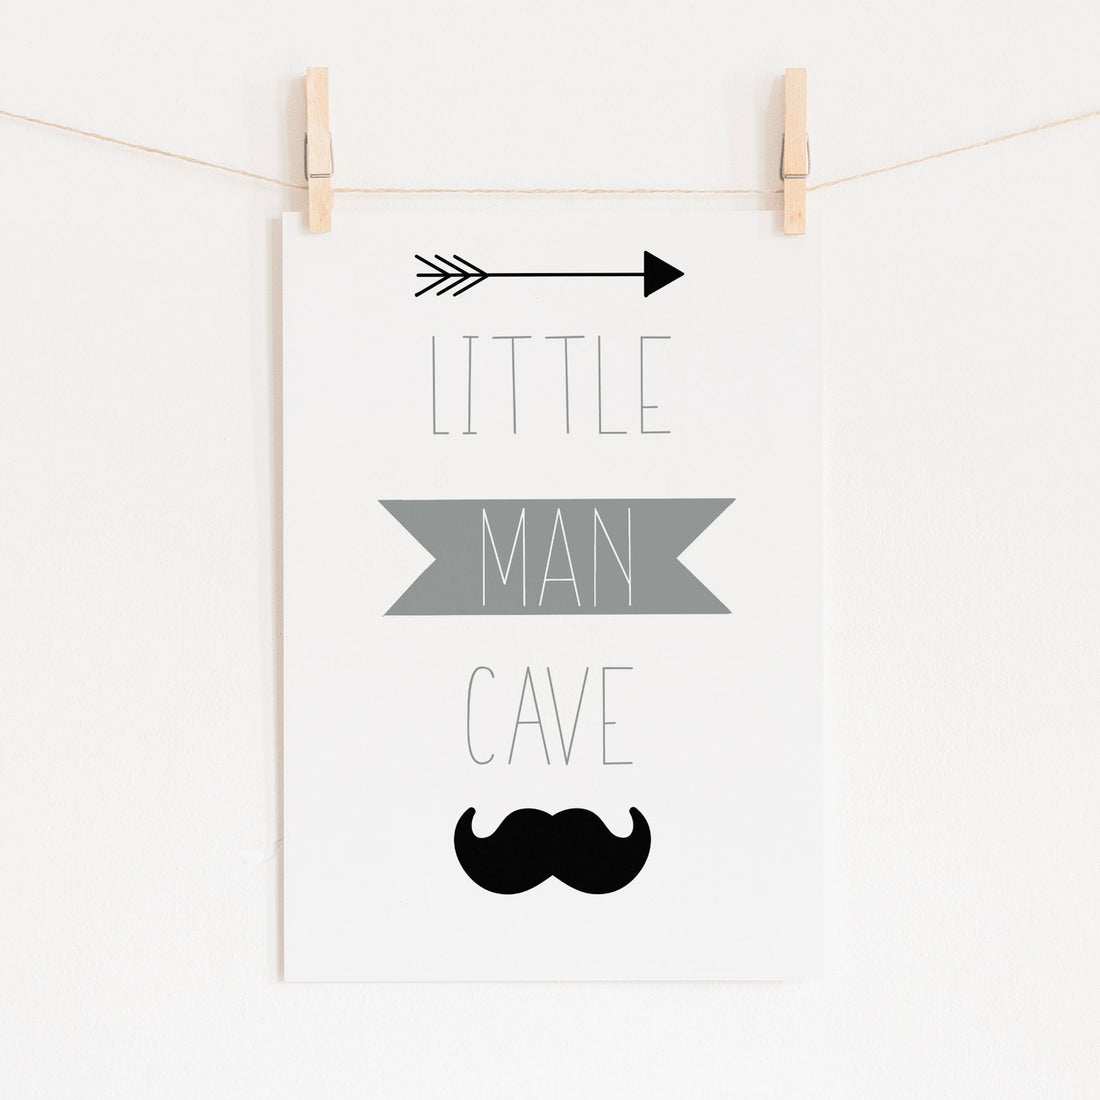 Little Man Cave Print